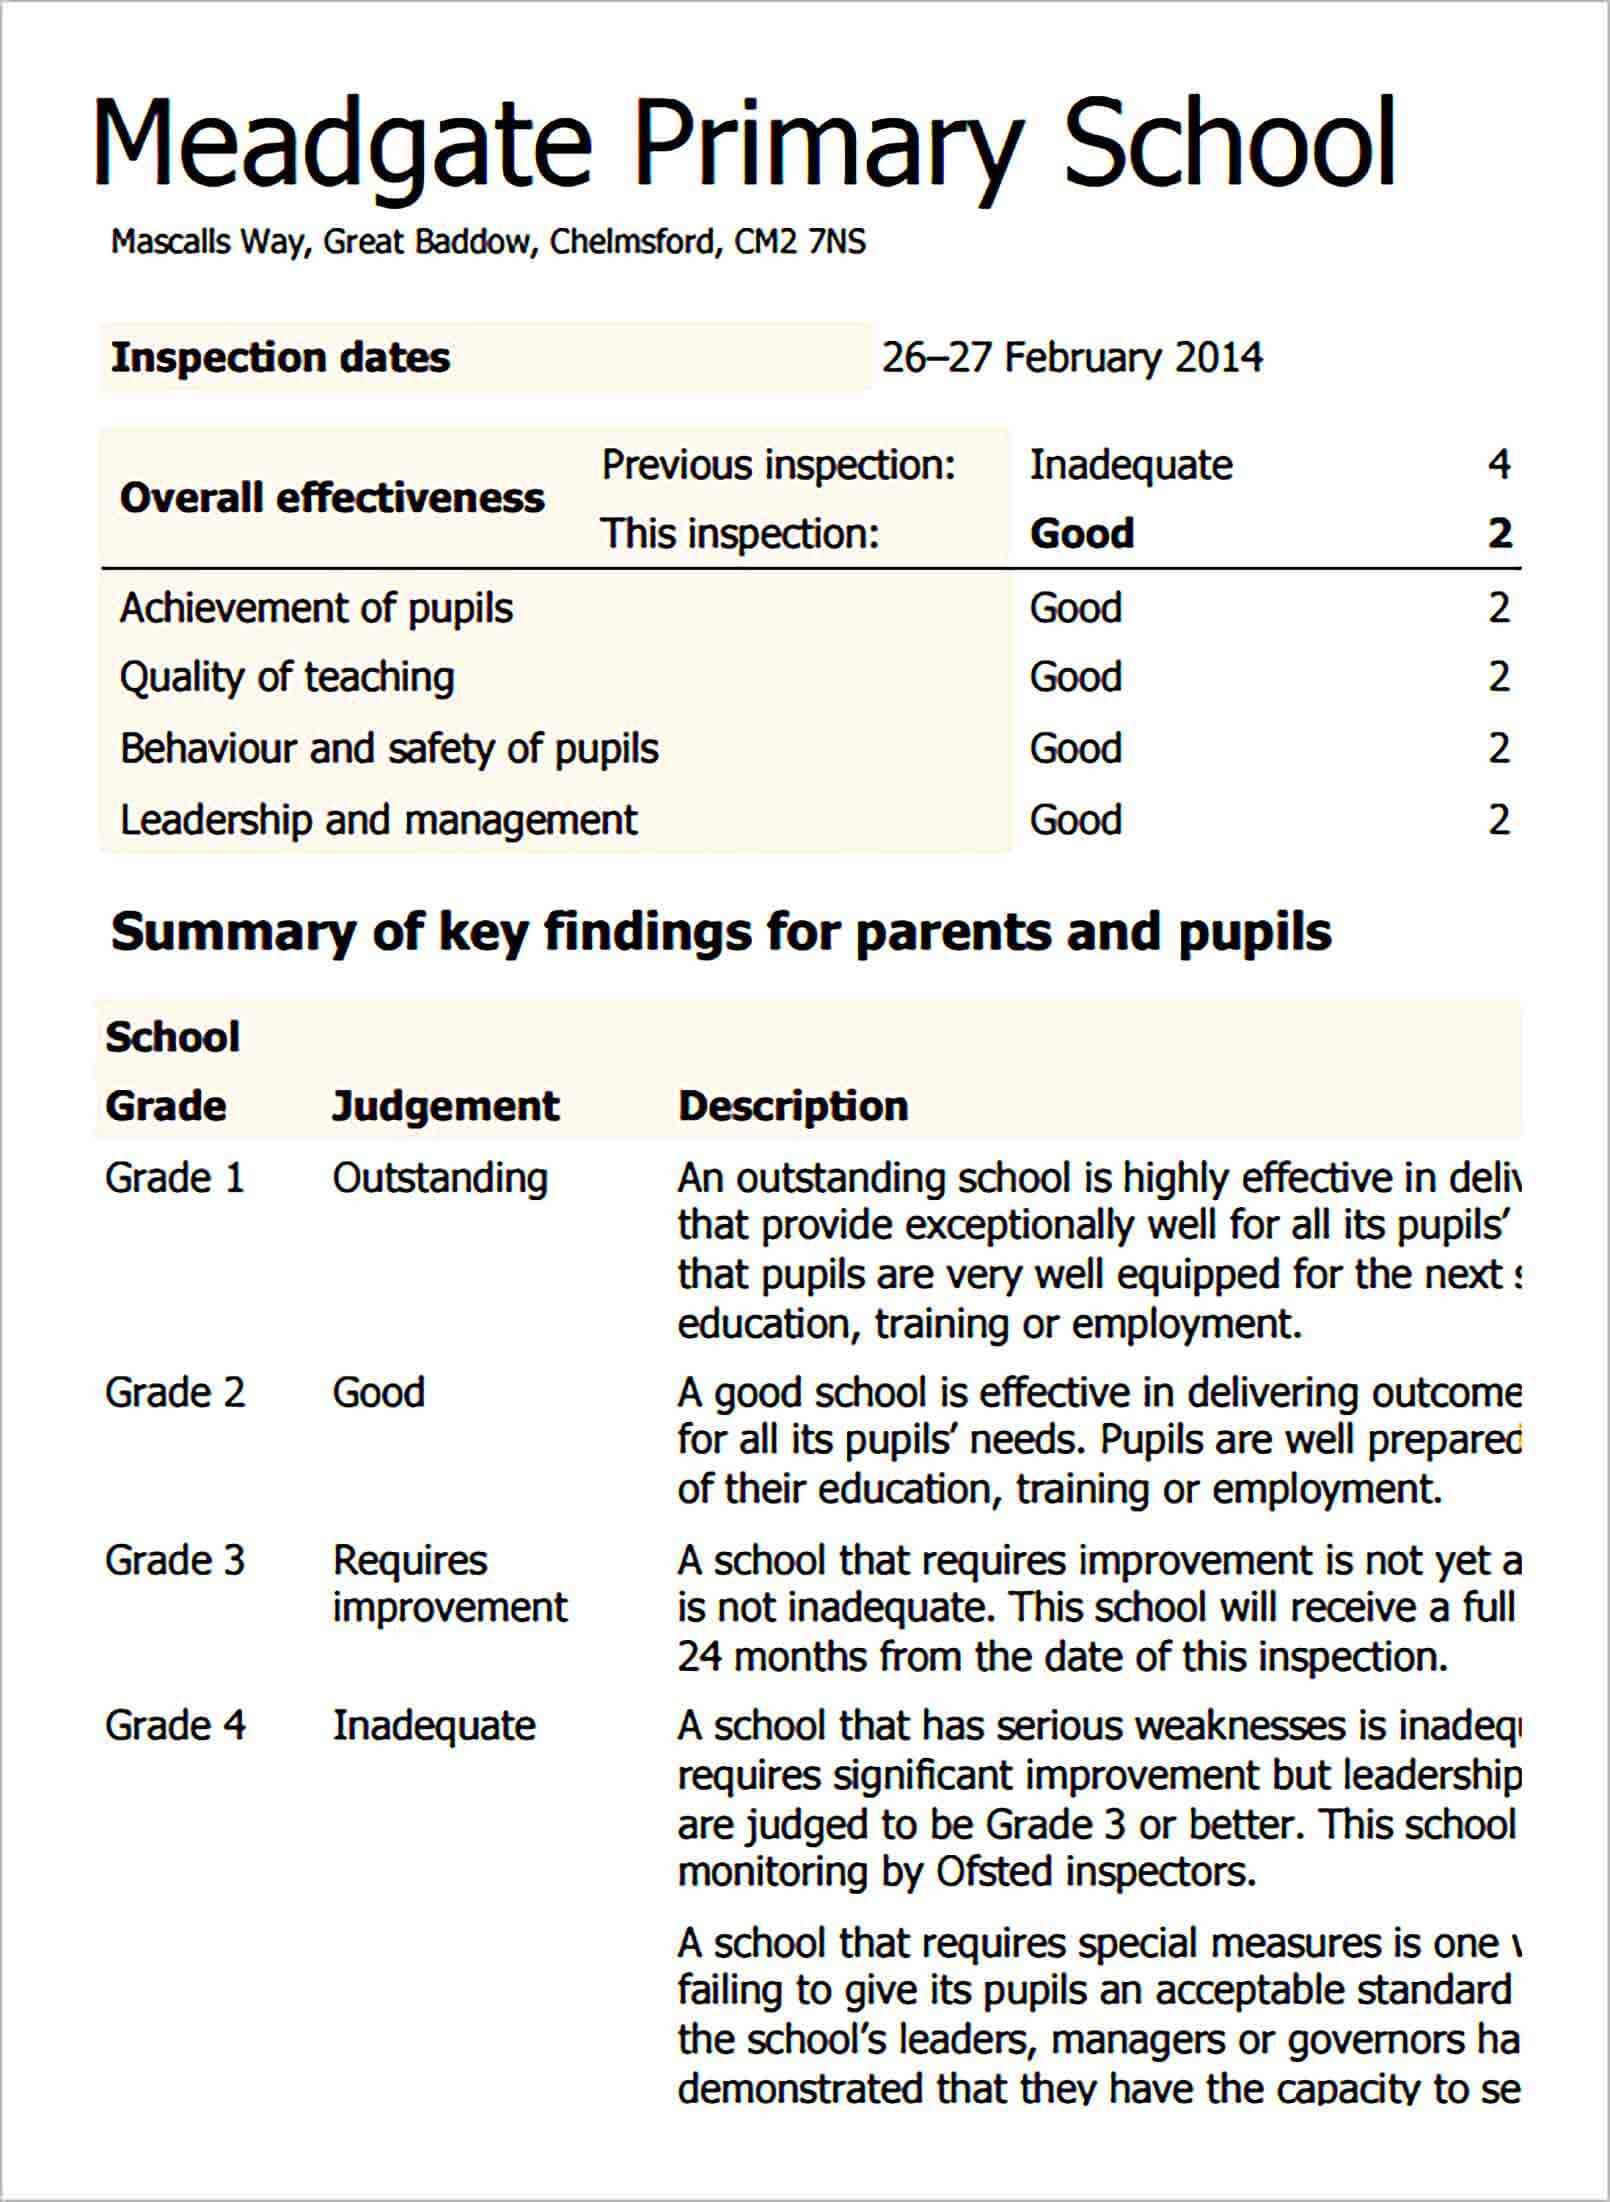 Sample Meadgate Primary School Report 1 1